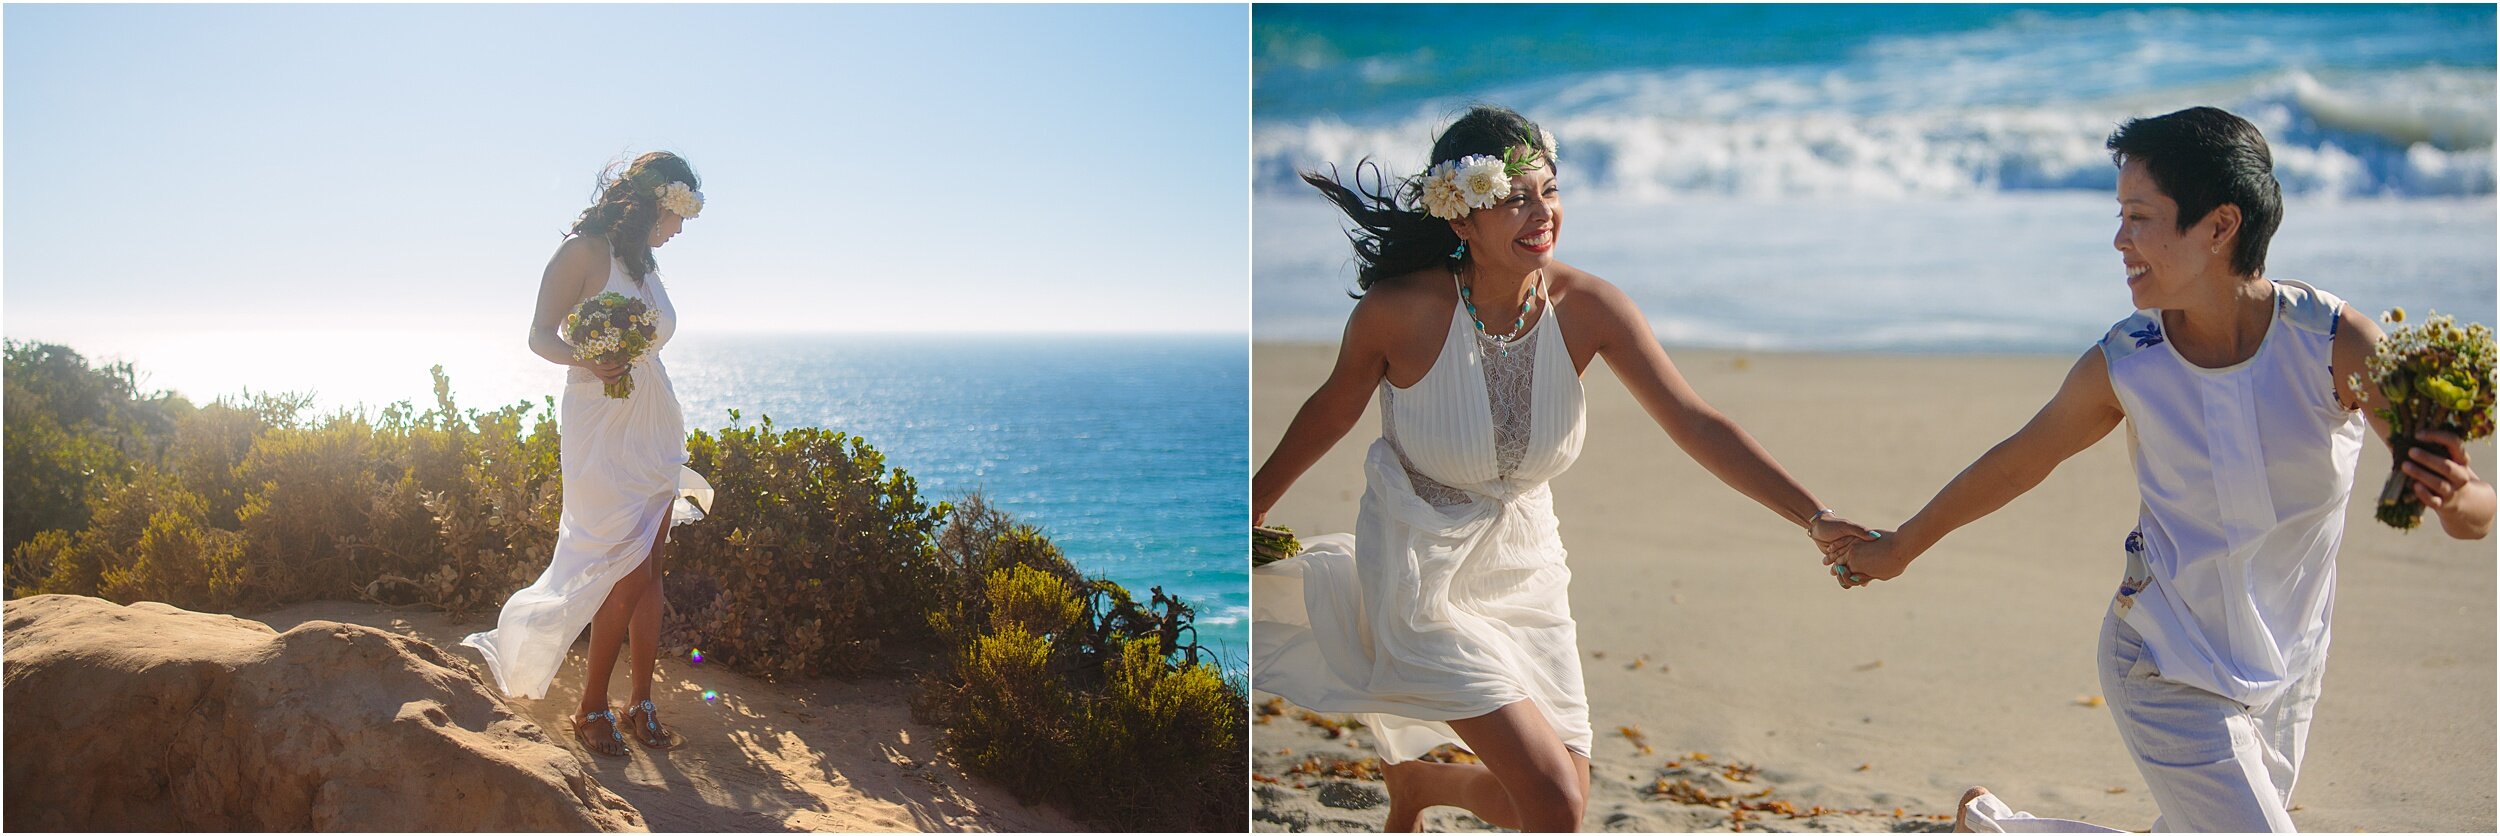 Malibu Elopement photographer | Malibu Wedding Photographer | Jennifer Whalen Weddings | Malibu Photographer_0008.jpg